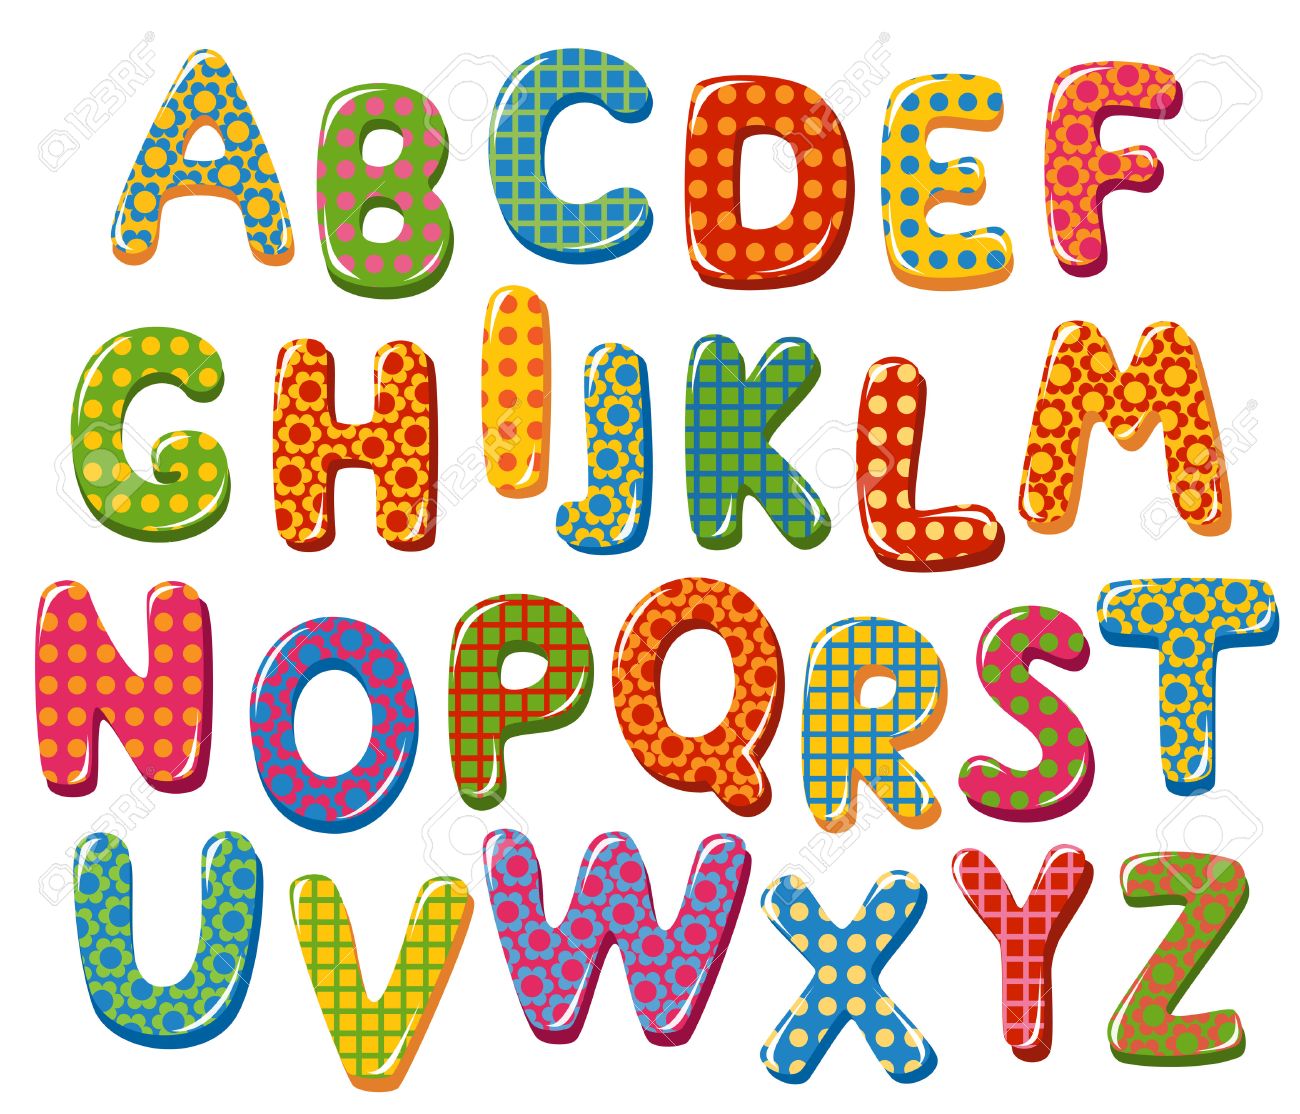 colorful-alphabet-letters-clip-art-20-free-cliparts-download-images